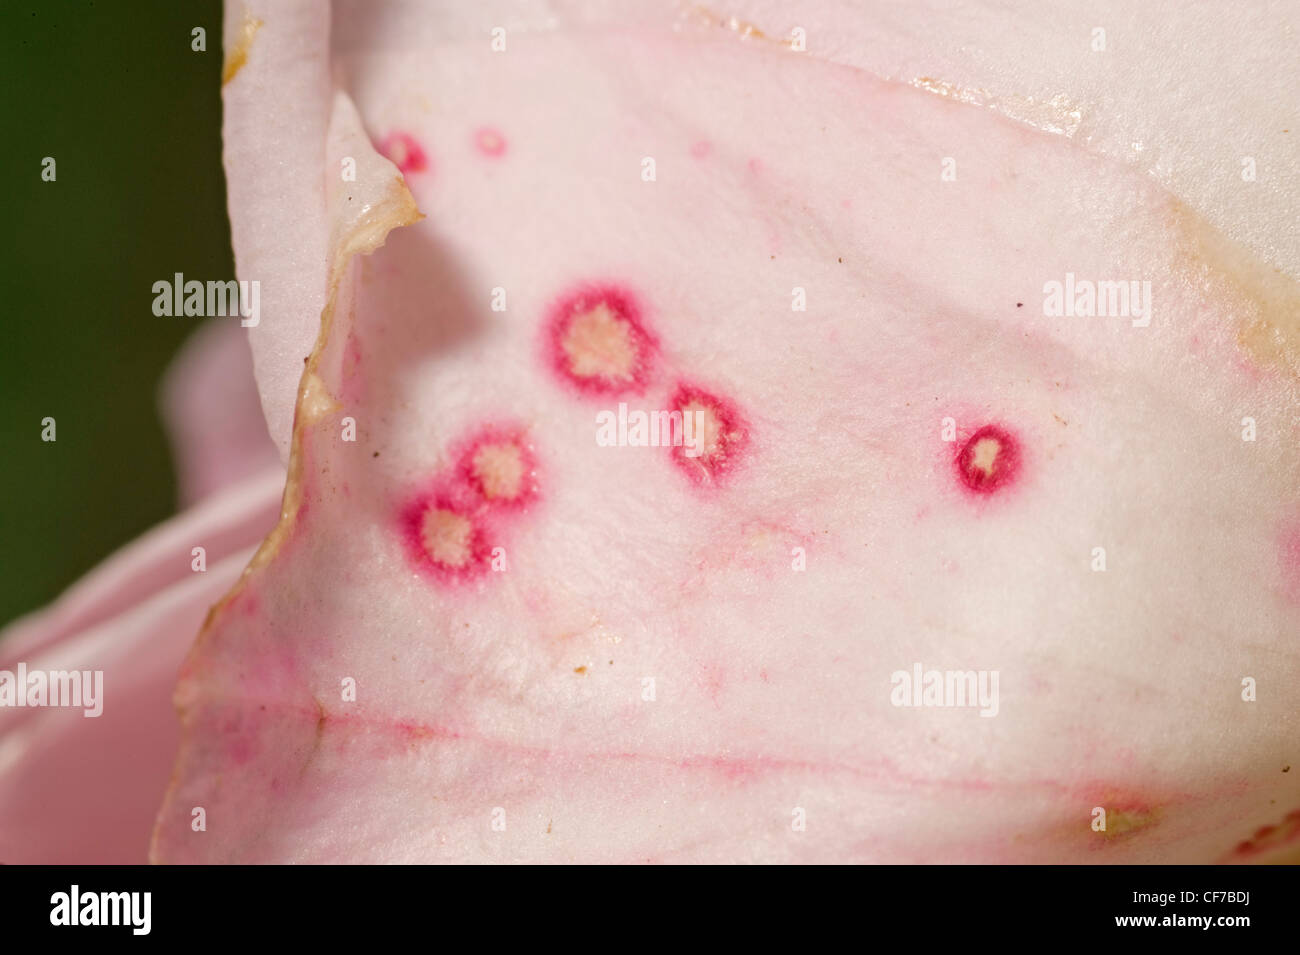 Grey mould Botrytis symptoms on rose petal Stock Photo